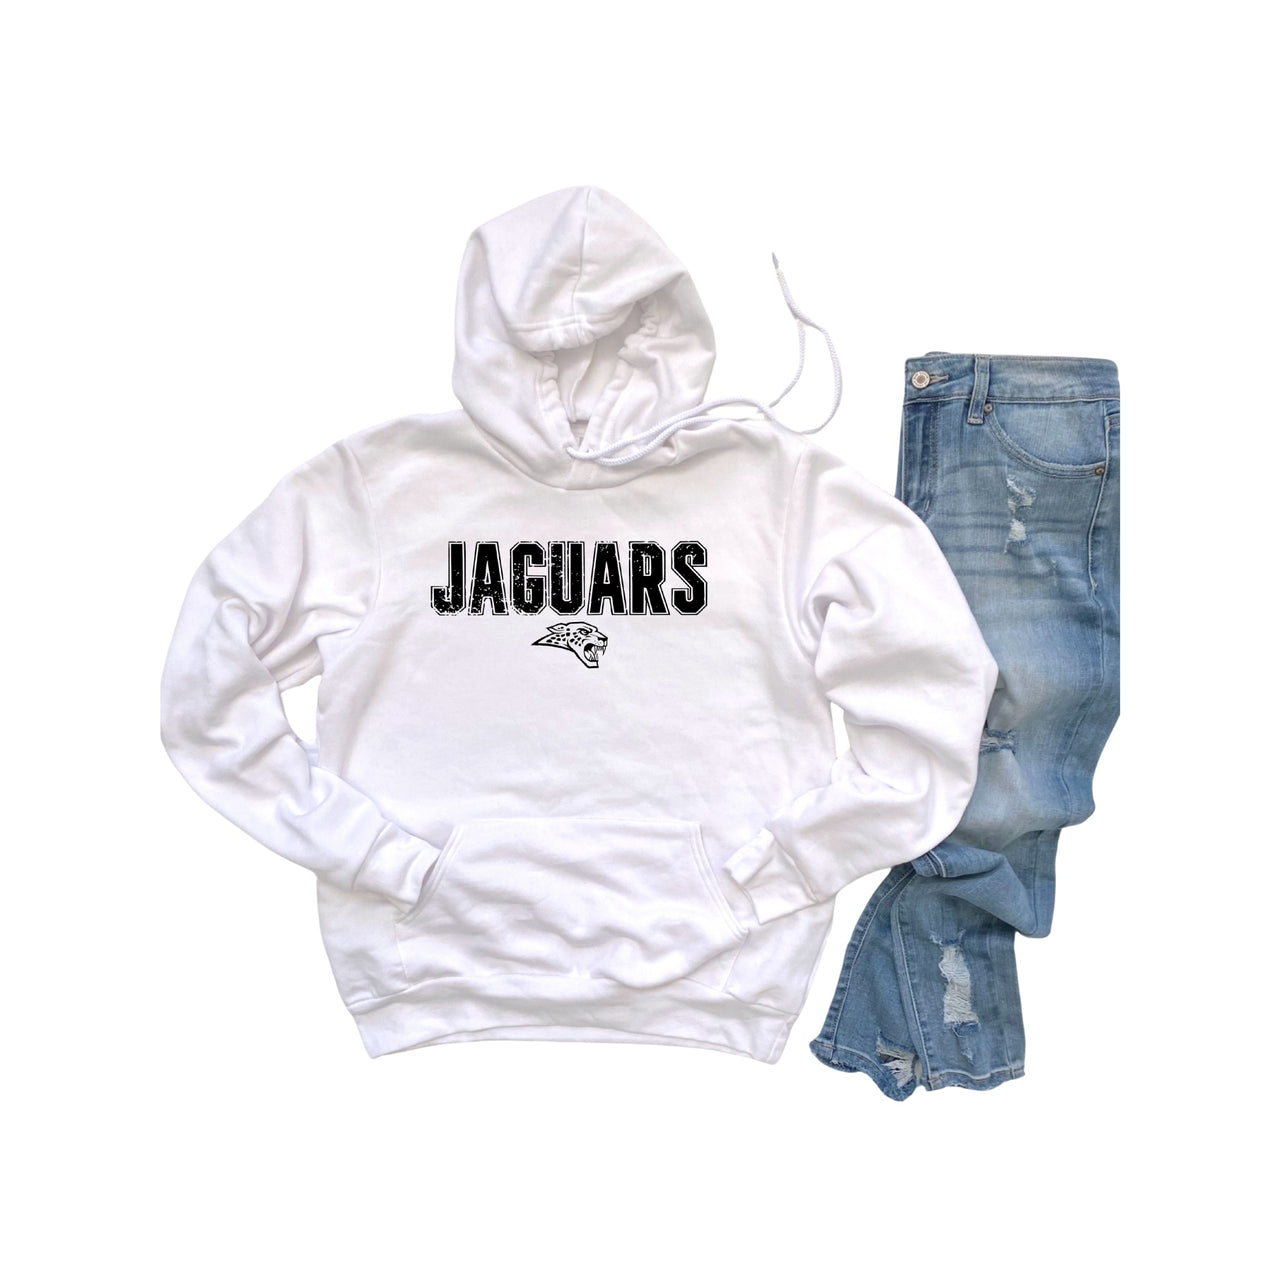 Adult - (6 Apparel Options) - Jaguars Collection